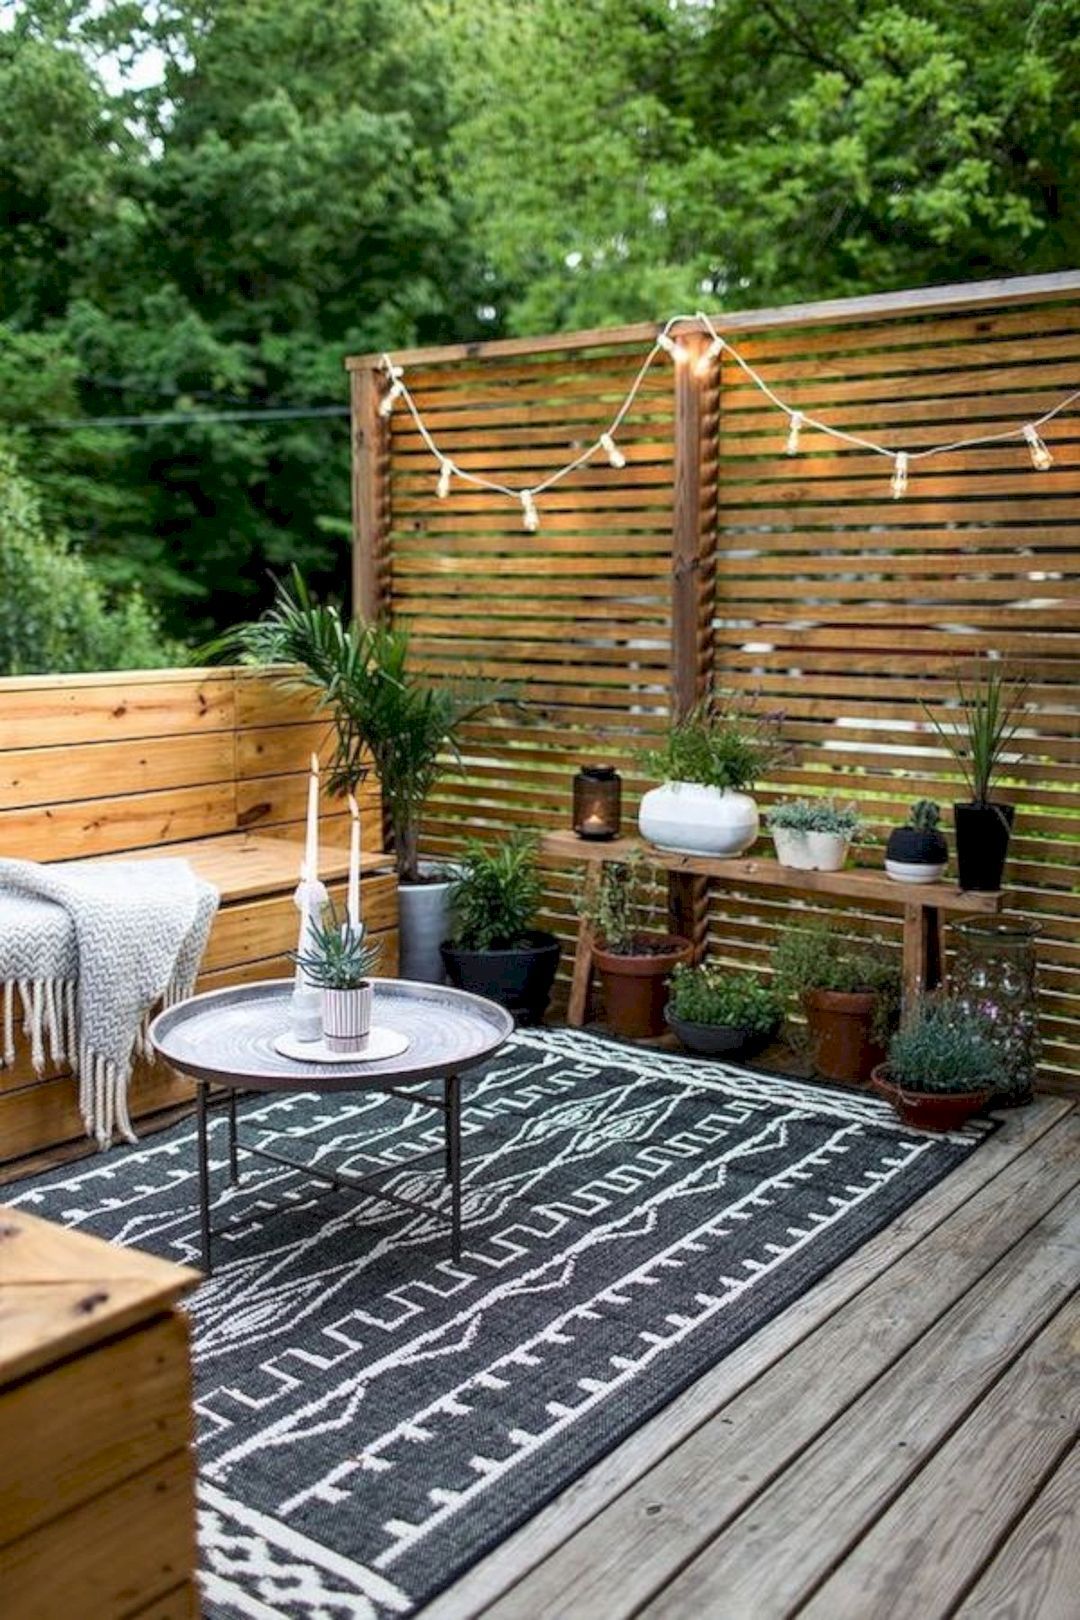 Creating a Beautiful Backyard Patio on a Budget